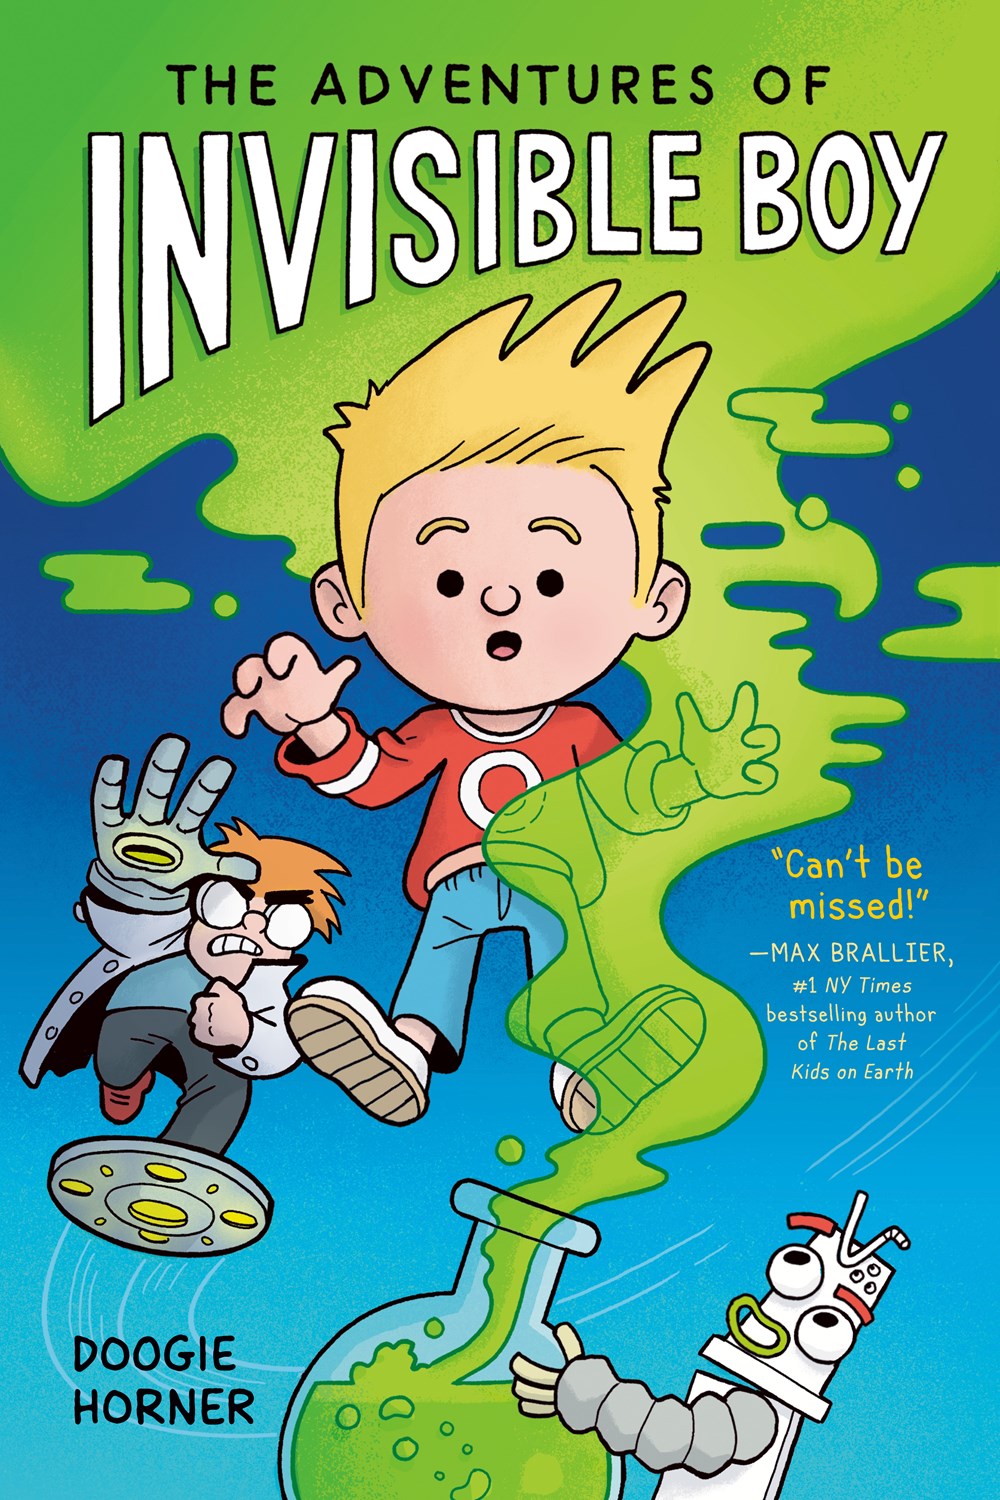 The Adventure of Invisible Boy - Doogie Horner